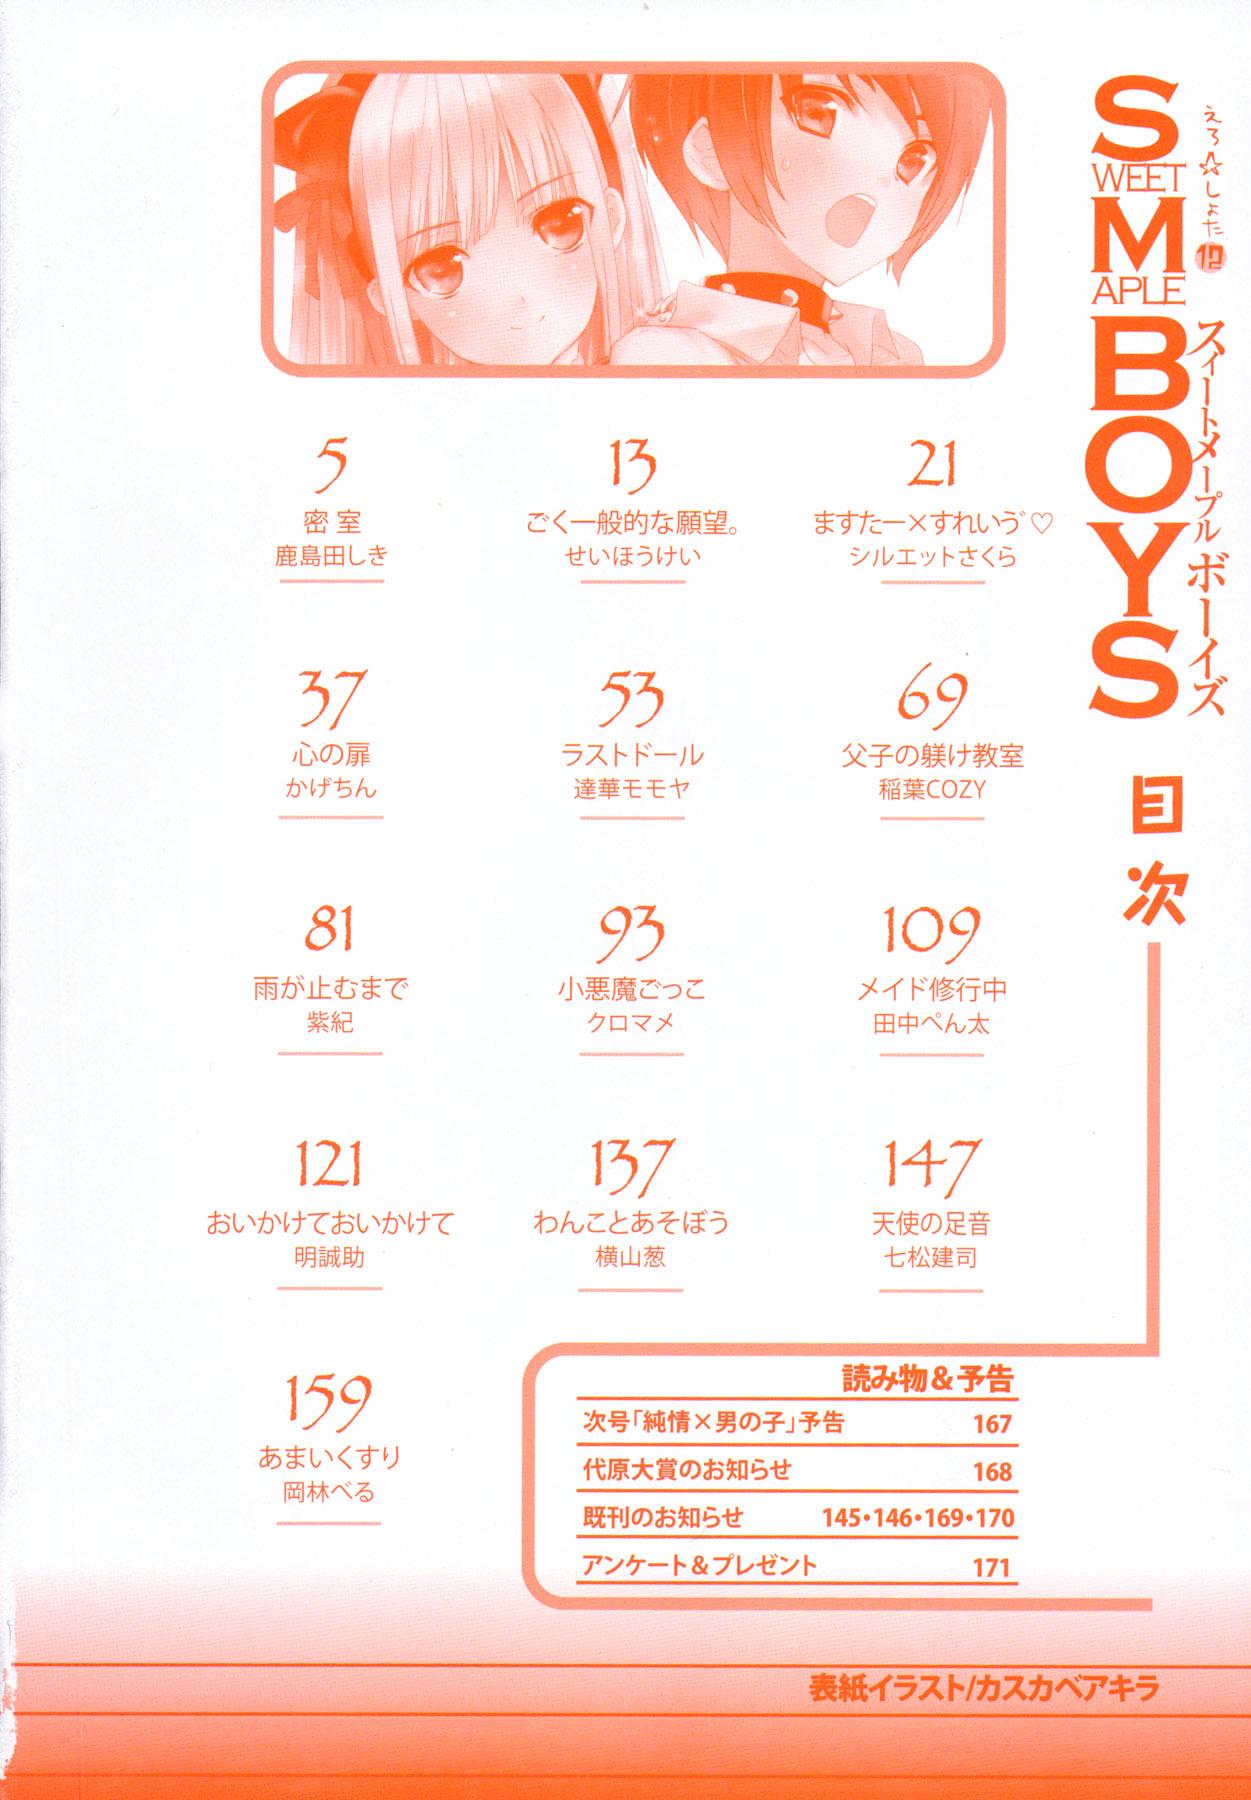 Blow Job Ero Shota 12 - Sweet Maple Boys Chubby - Page 3